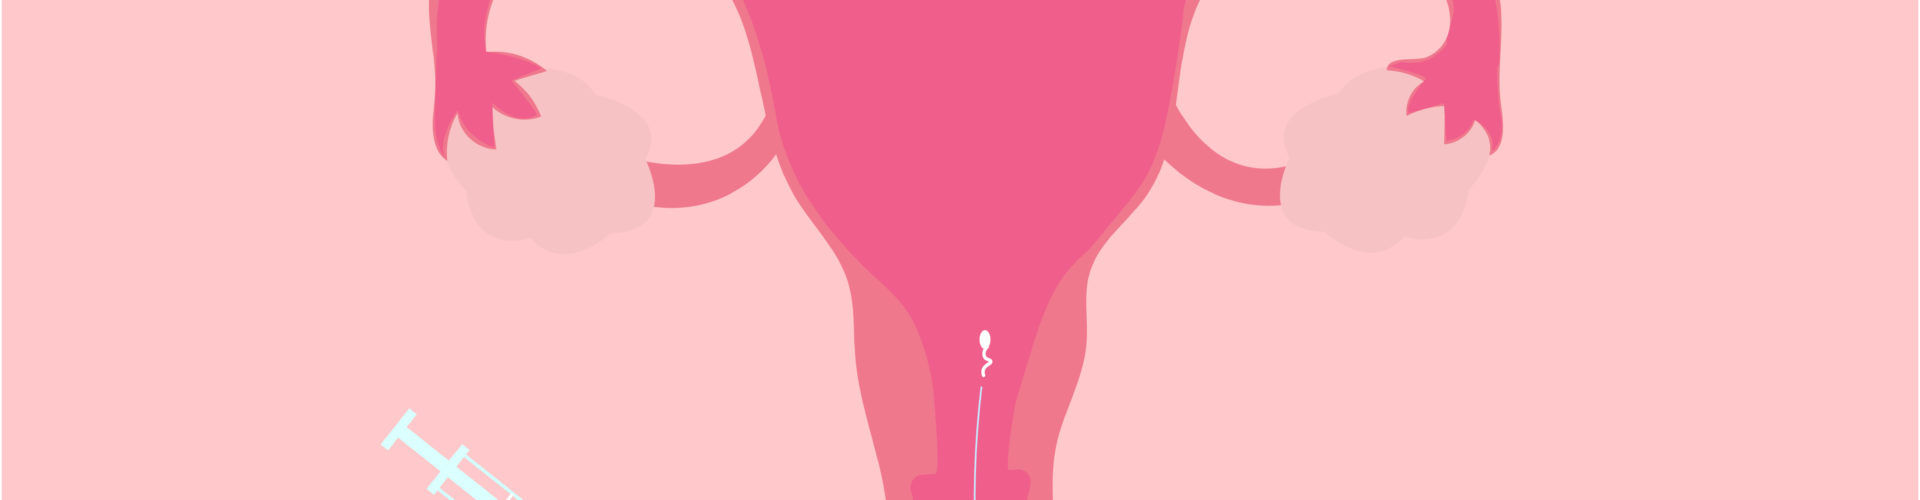 Vector illustration of intrauterine insemination (IUI)